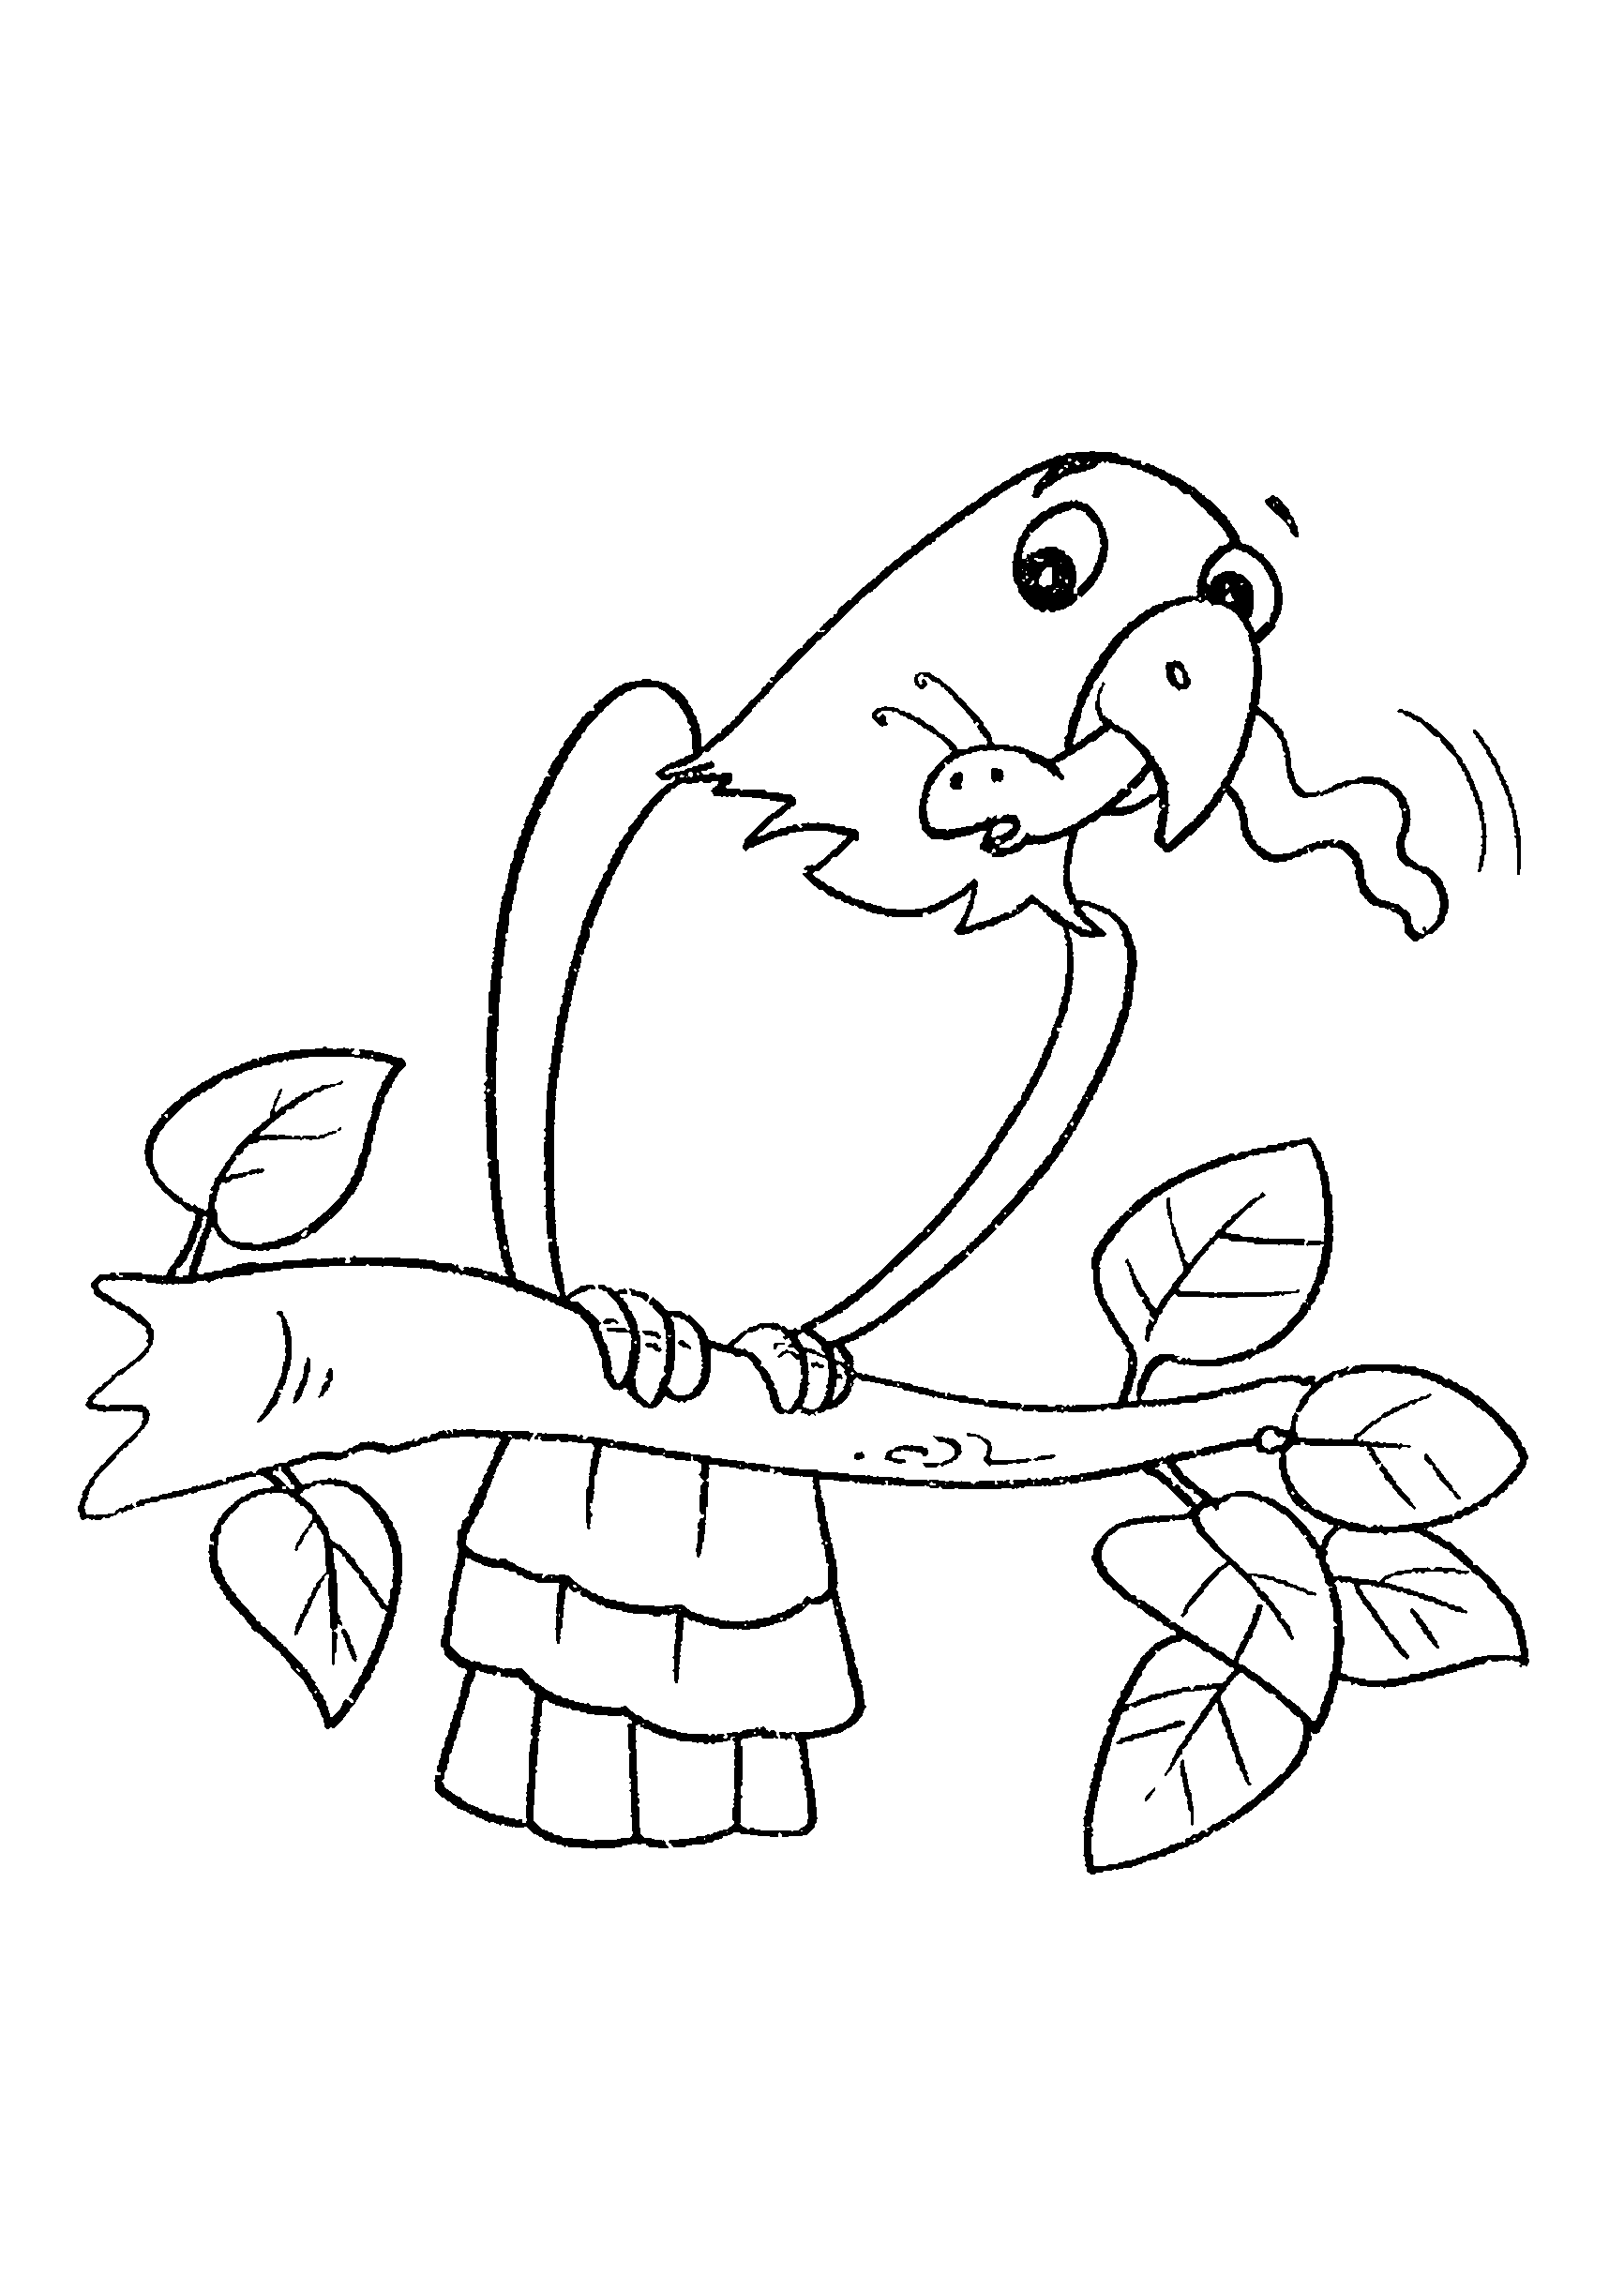 Desenho de papagaio se alimentando